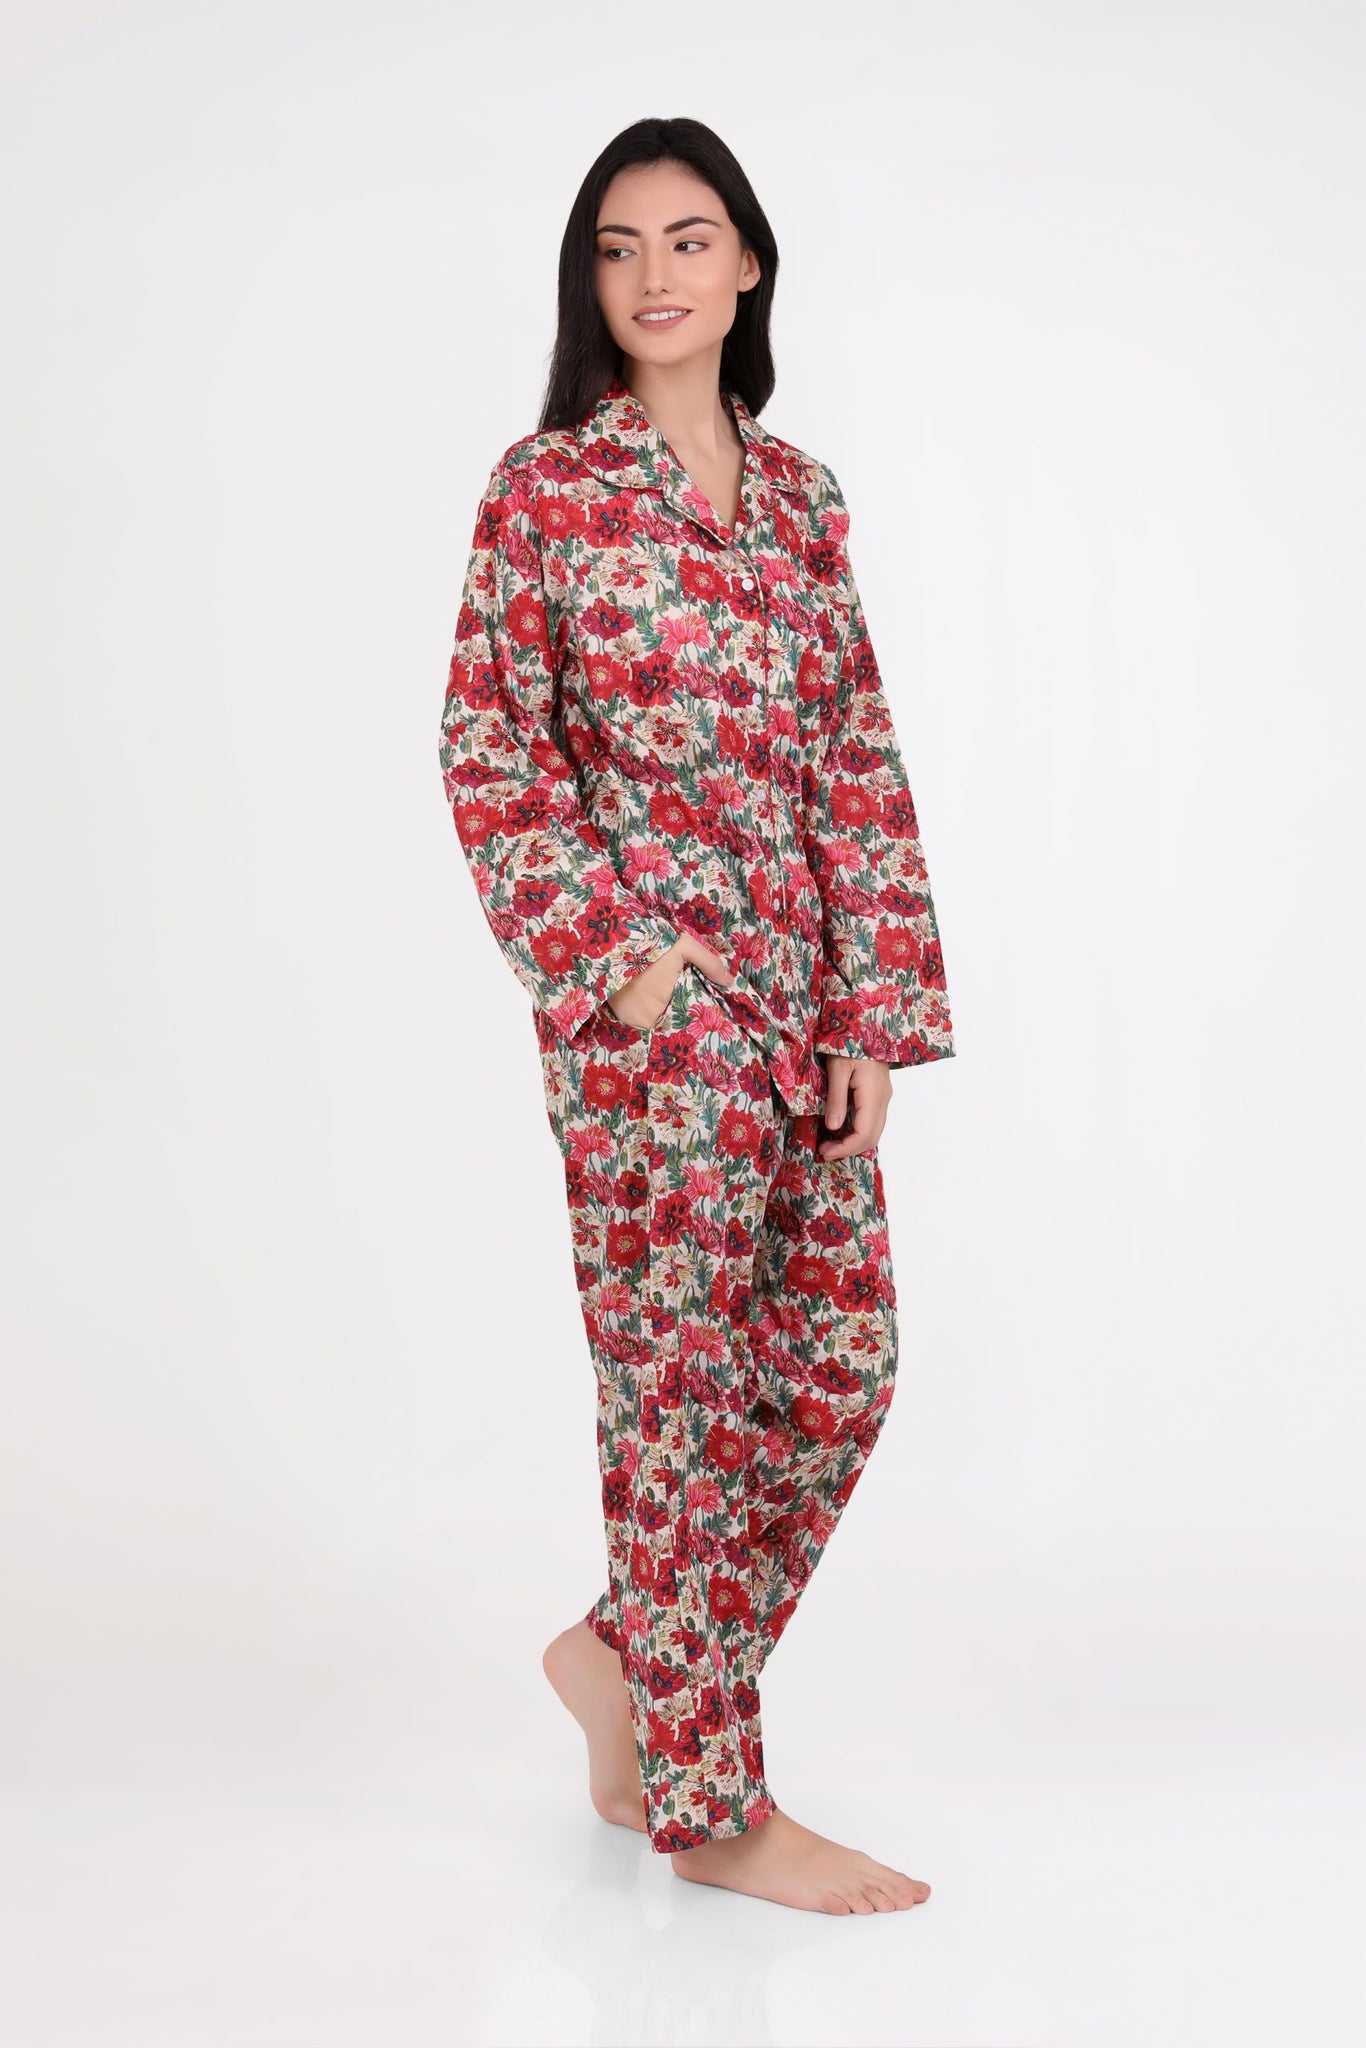 Arabella 100% Cotton Red Floral Pyjamas